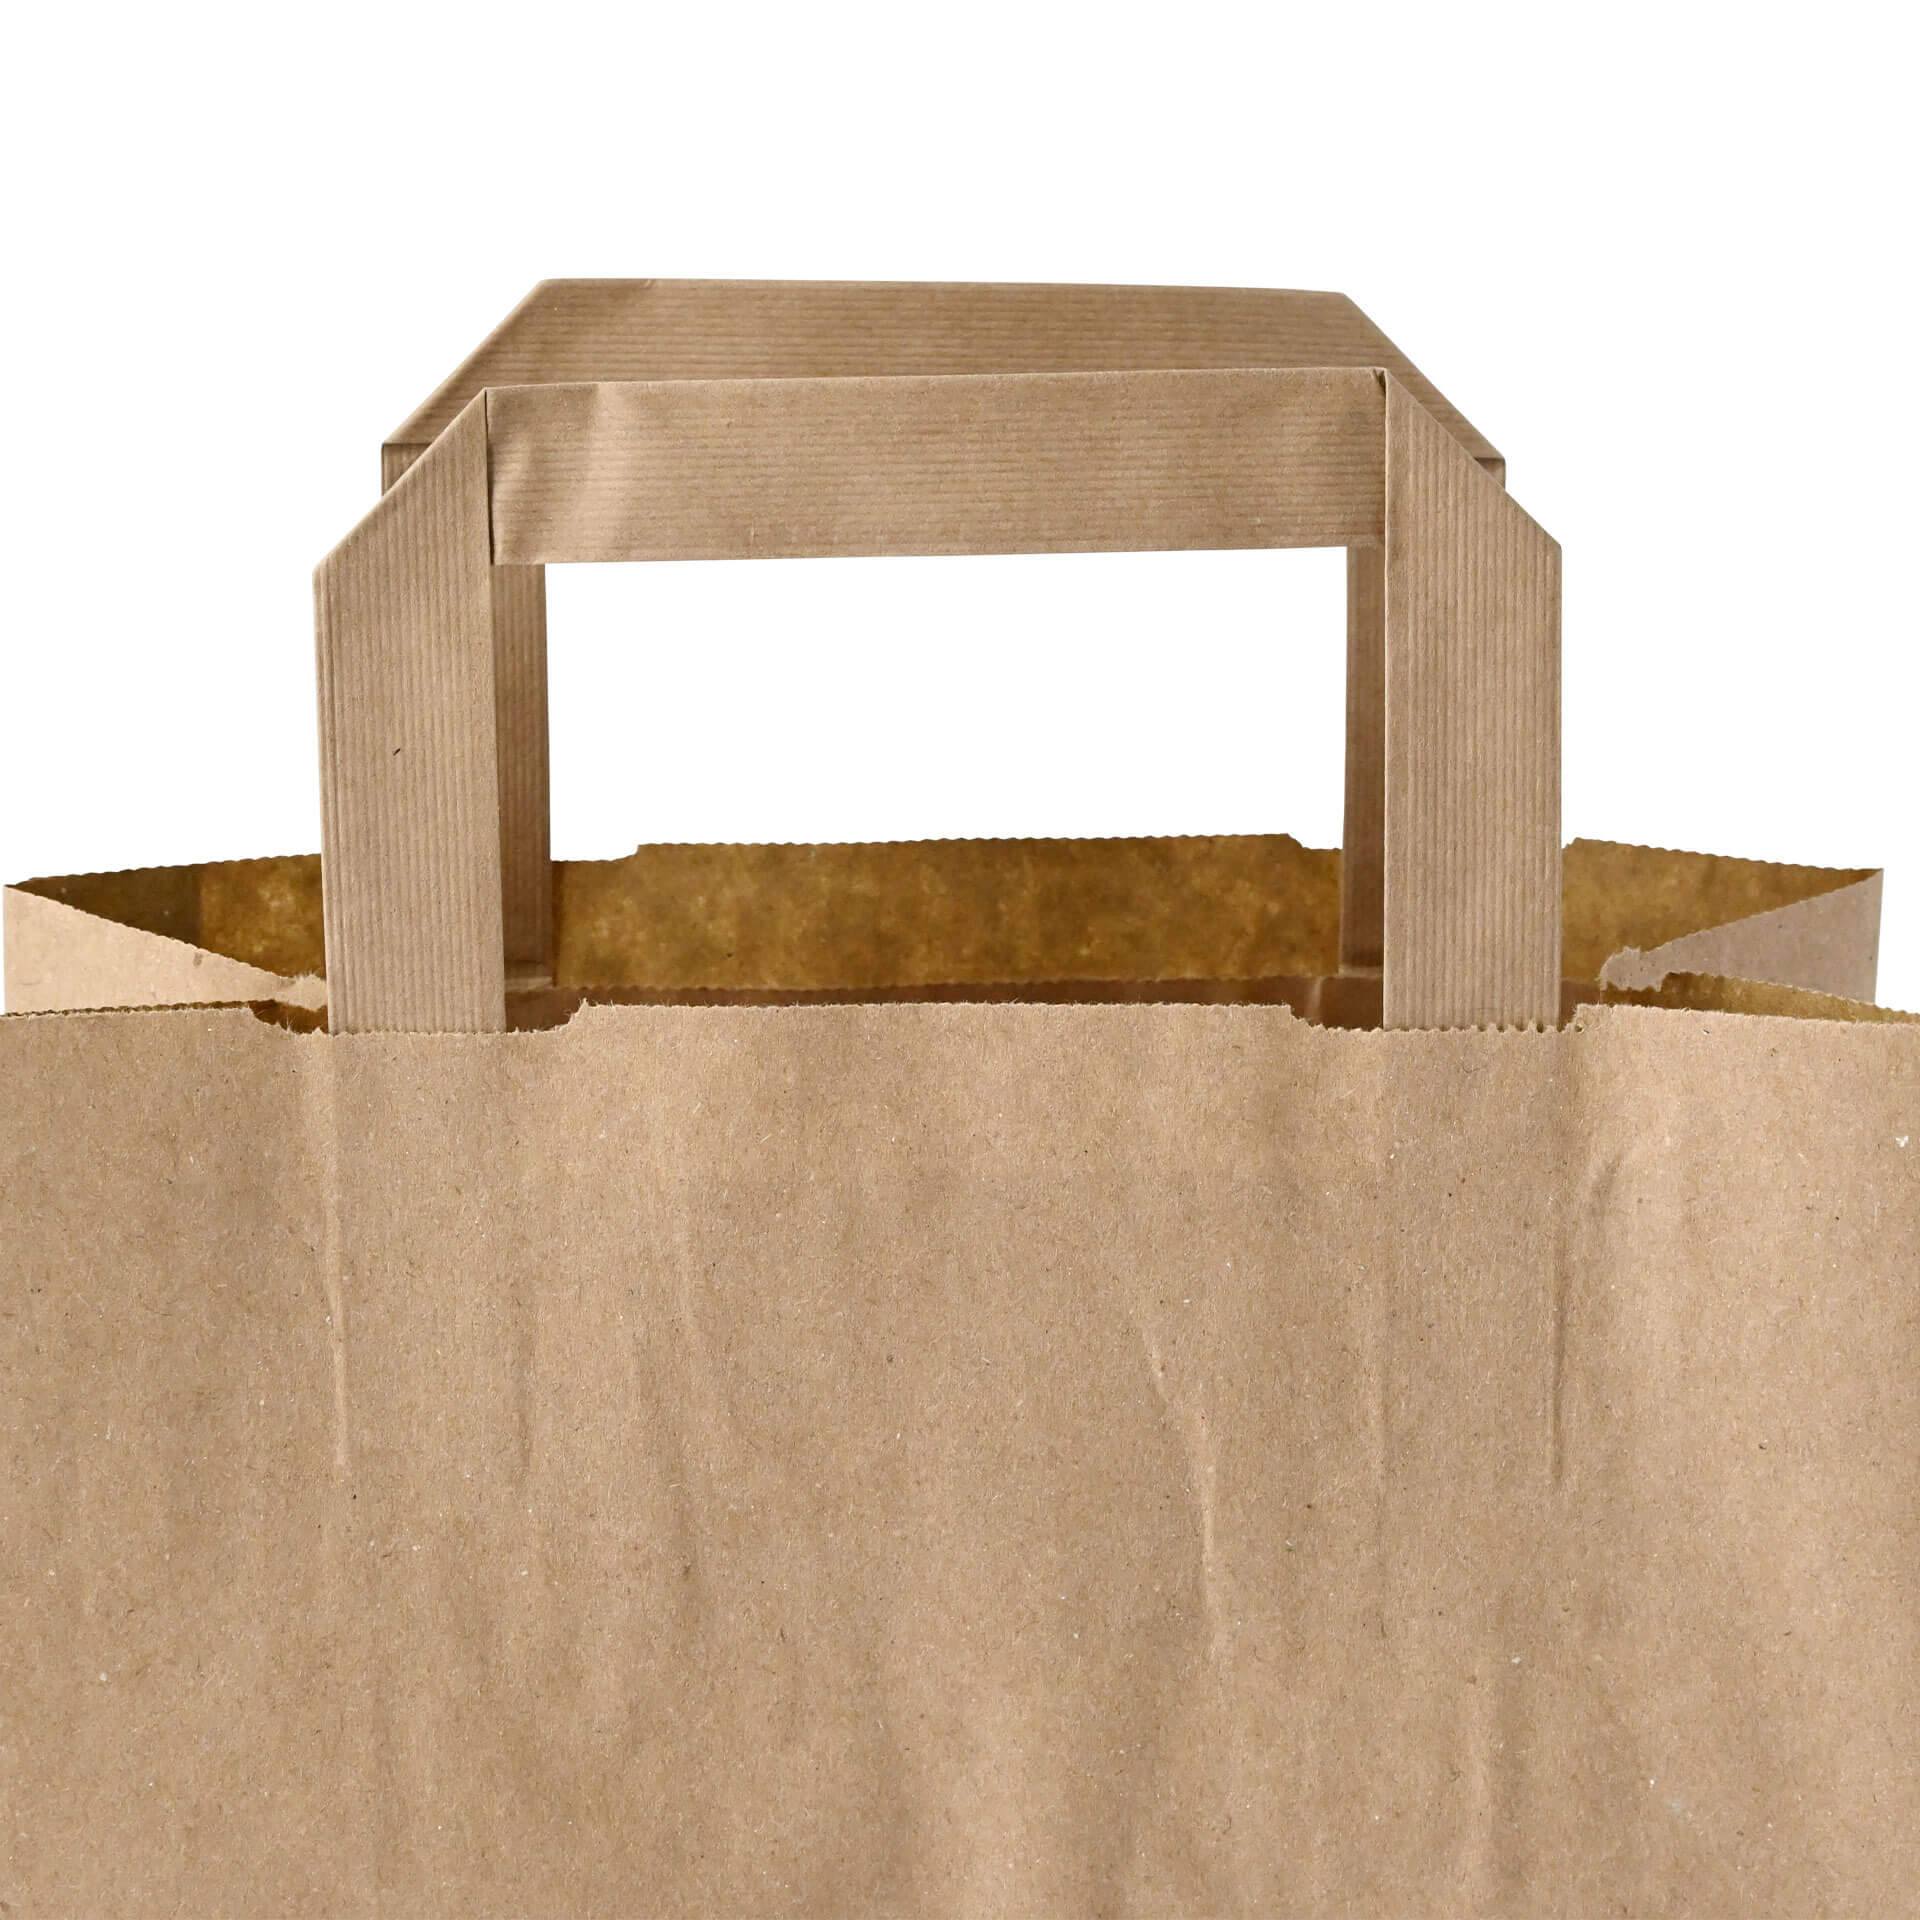 Recycling paper-carrier bags M, 22 x 10 x 28 cm, kraft